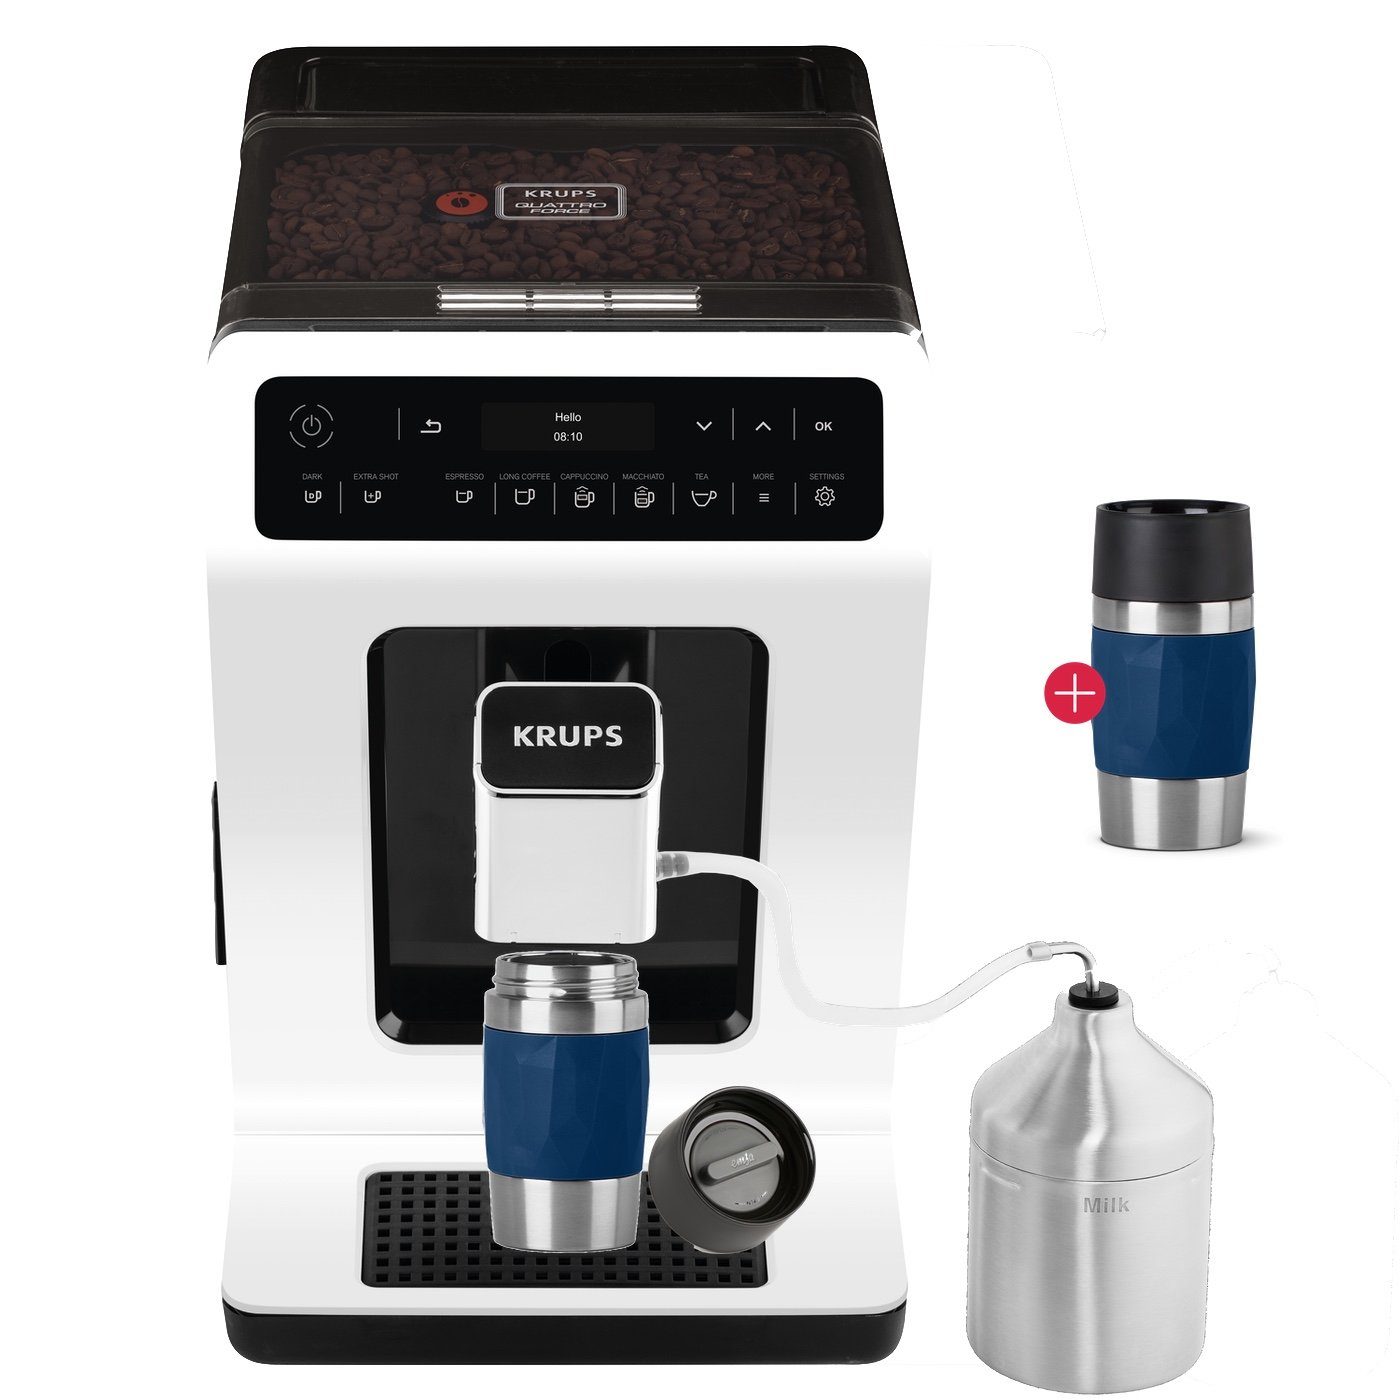 Krups Kaffeevollautomat EA8911 Evidence, inkl. Milchbehälter, intuitiver  OLED-Display, extra-großer Wassertank + Emsa Travel Mug Compact  (dunkelblau) 0,3 l